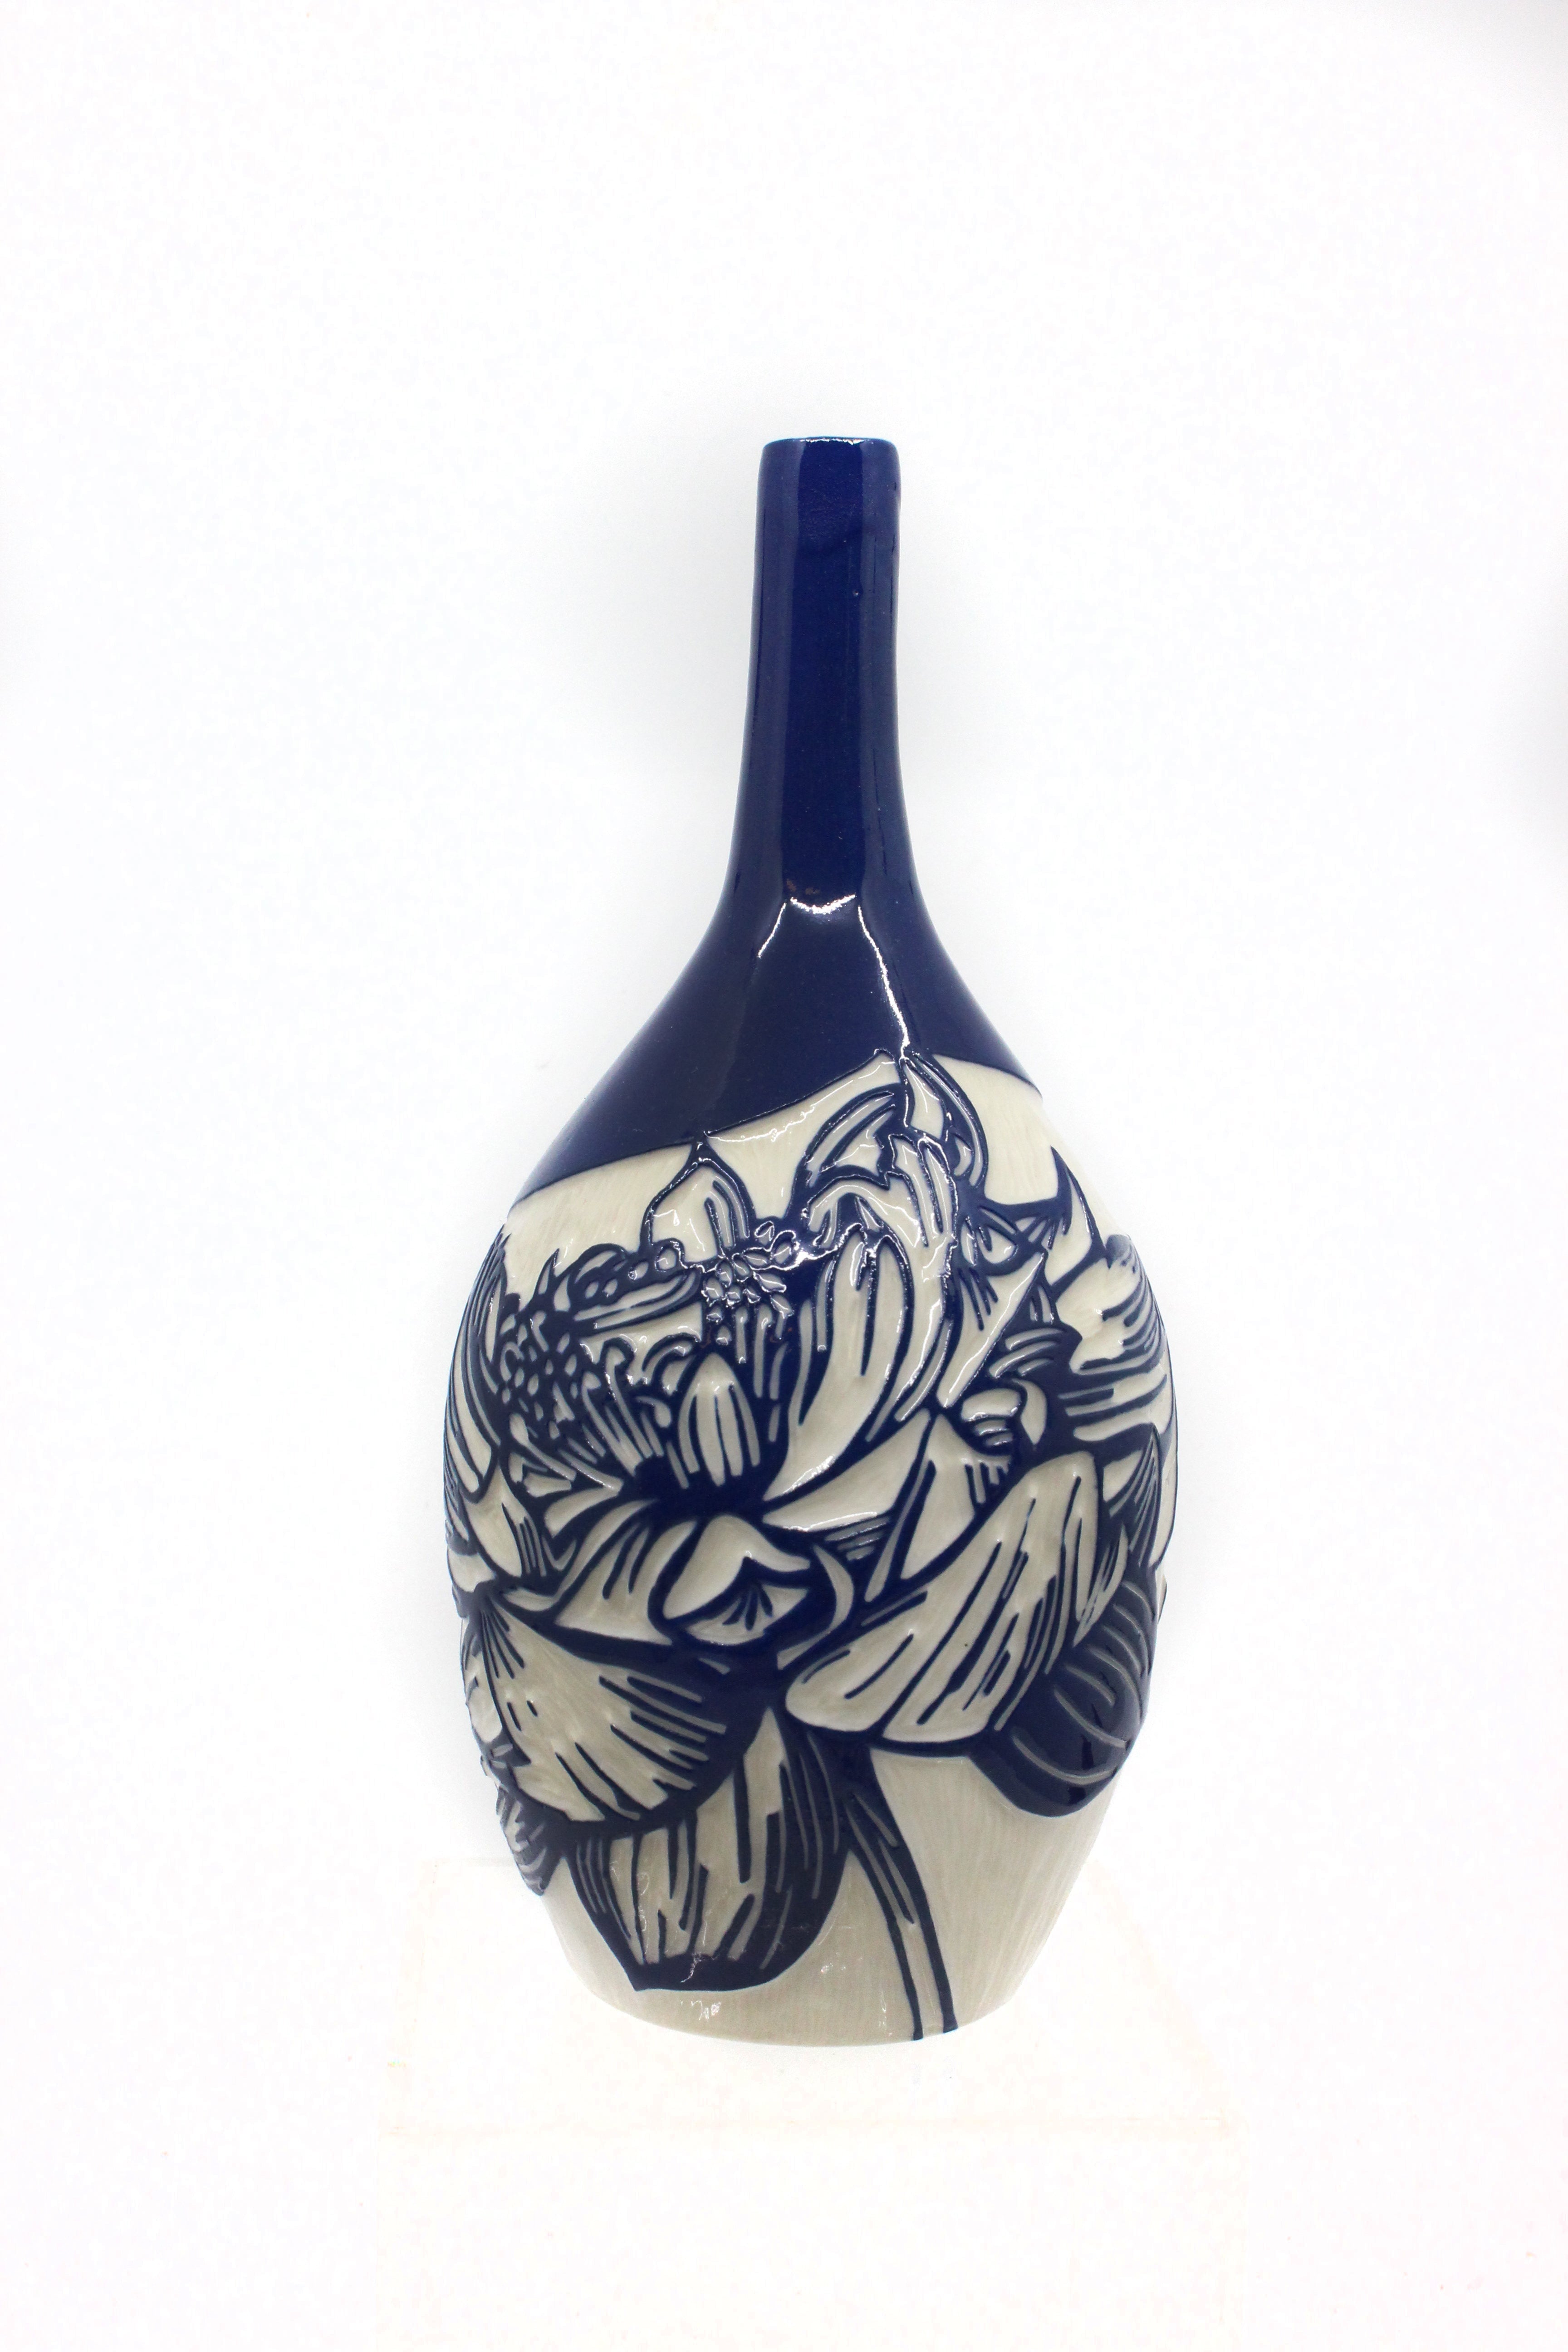 Bottle Vase - Lotus Flower - Large Ceramics Sam Pettigrew 